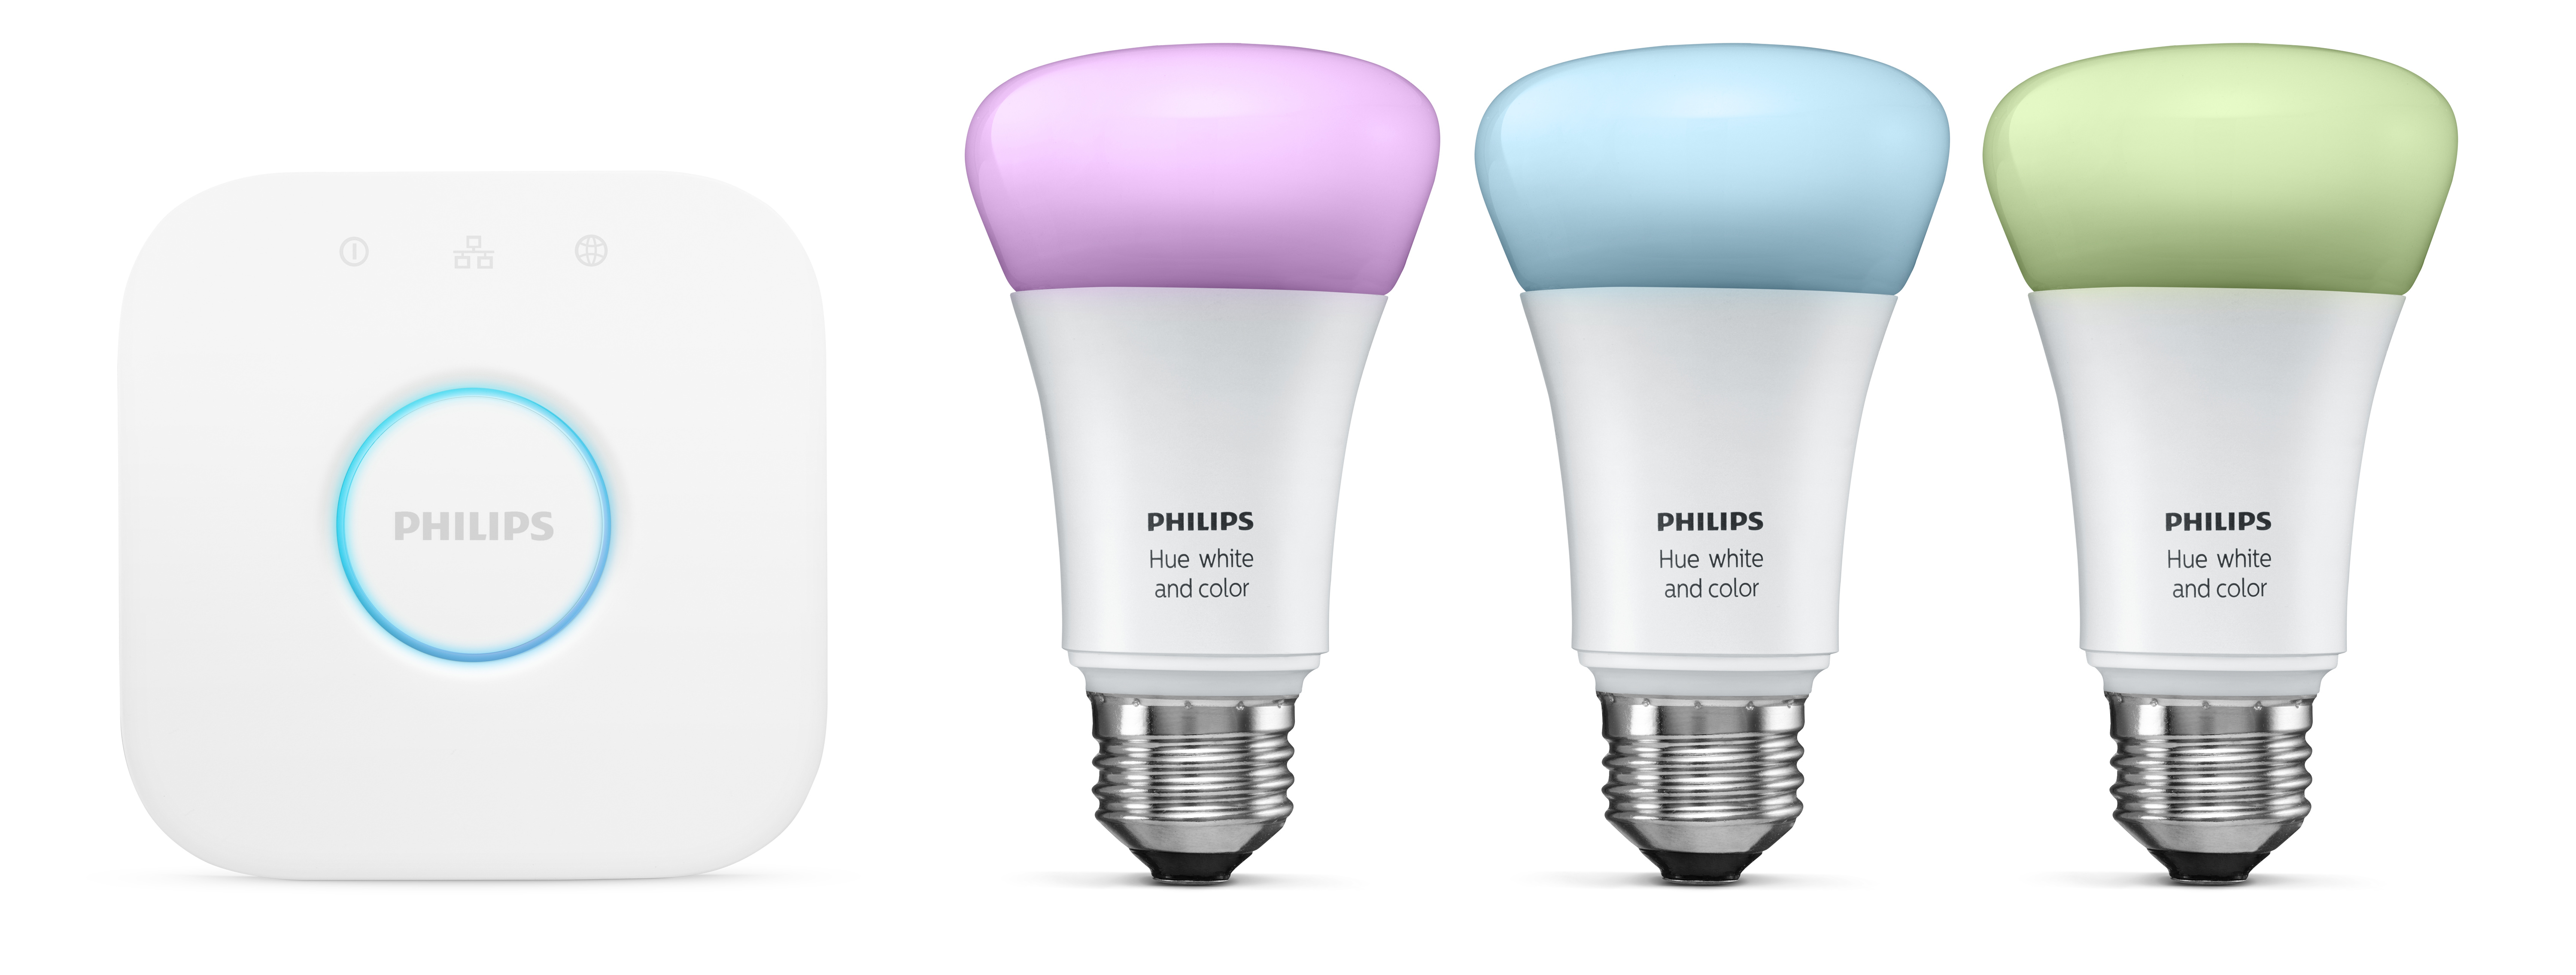 Нея филипс. Лампа светодиодная Philips Hue White and Color, e26, a19, 10вт. Philips Hue White and Color ambiance a19 Starter Kit. Philips светодиодные лампы Color. Philips Hue Bloom.